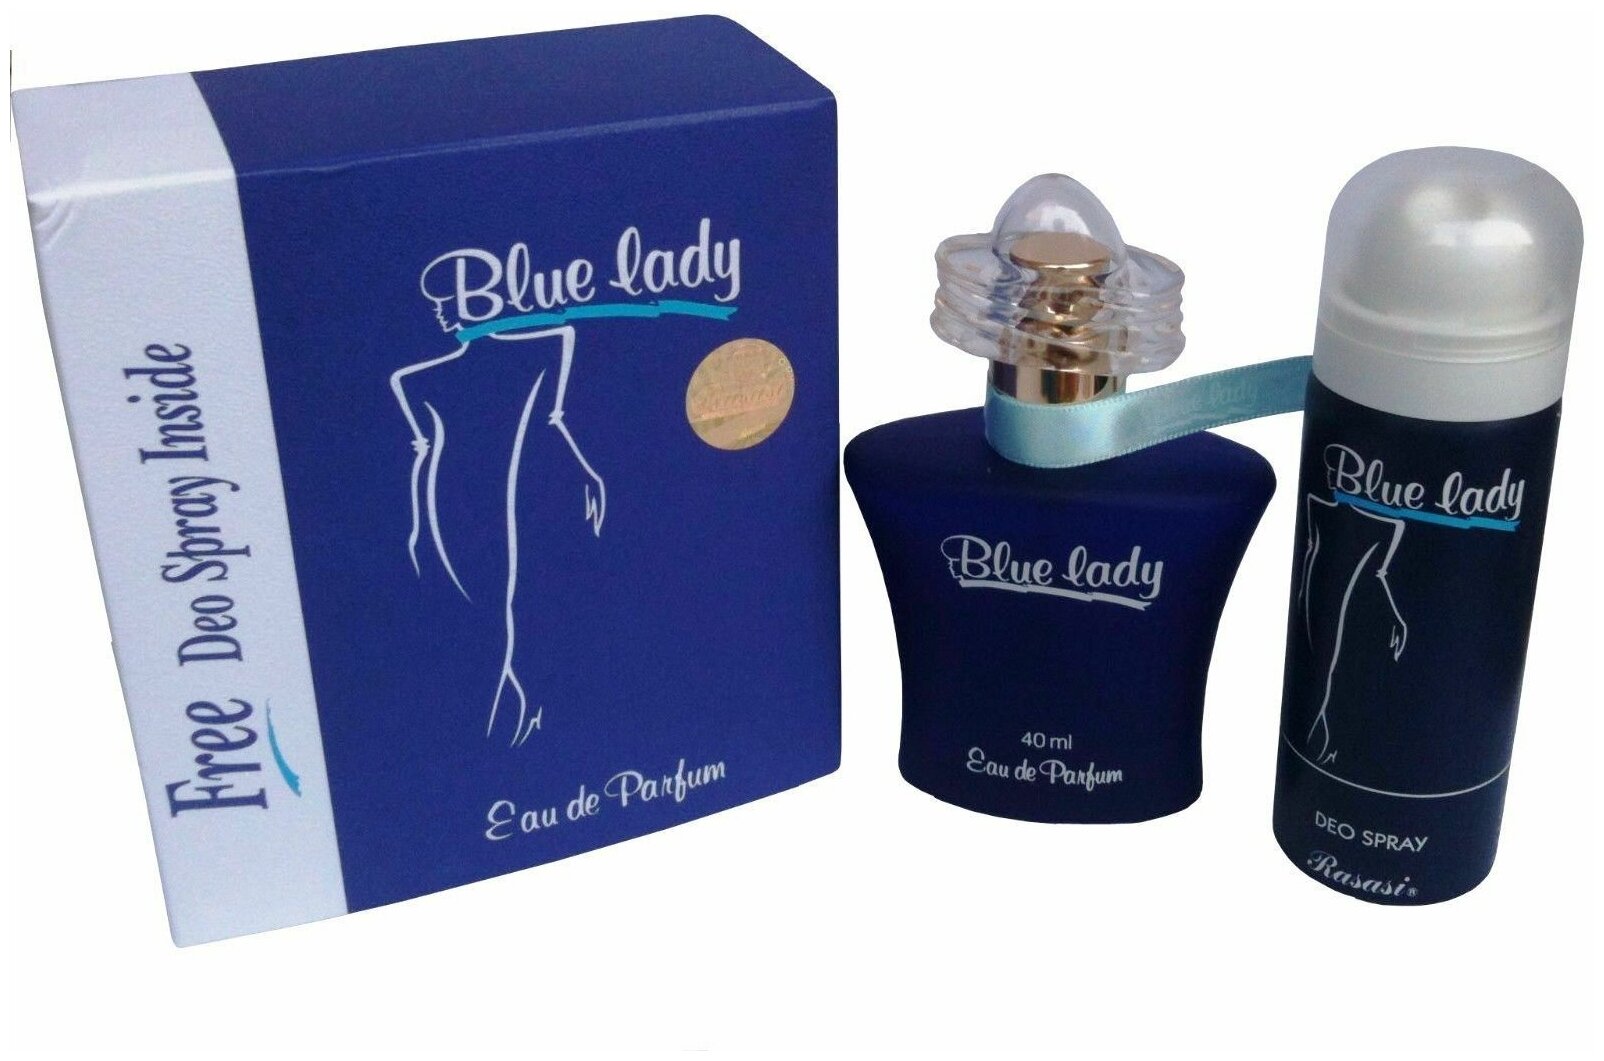 RASASI Blue Lady Женская парфюмерная вода 40 мл + Дезодорант 50 мл